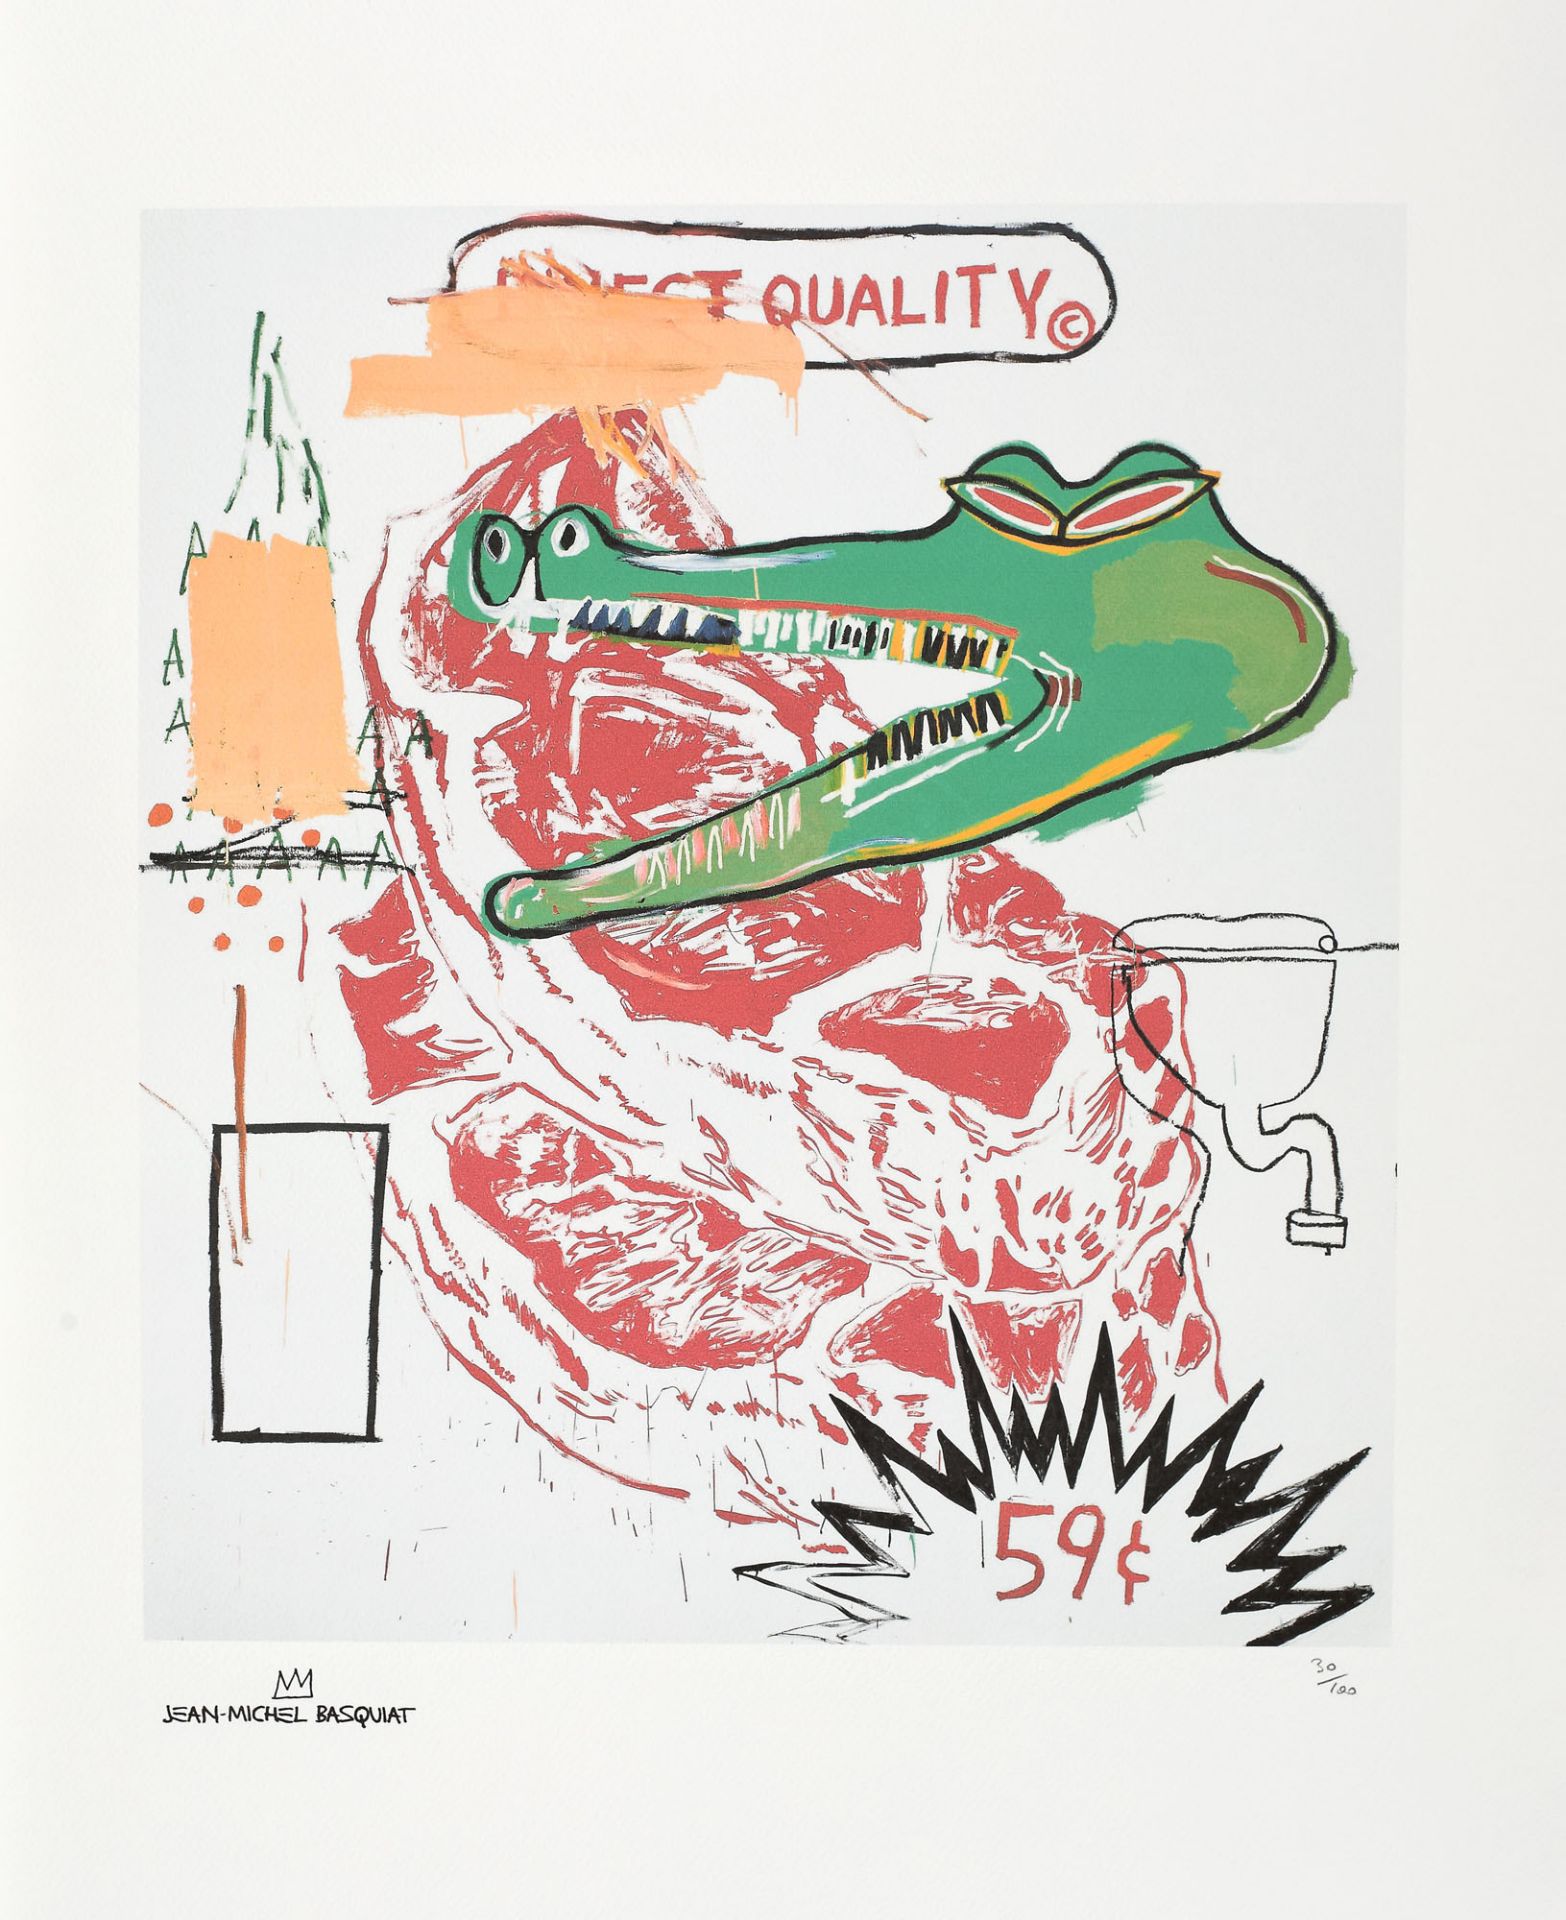 Jean-Michel Basquiat, Quality